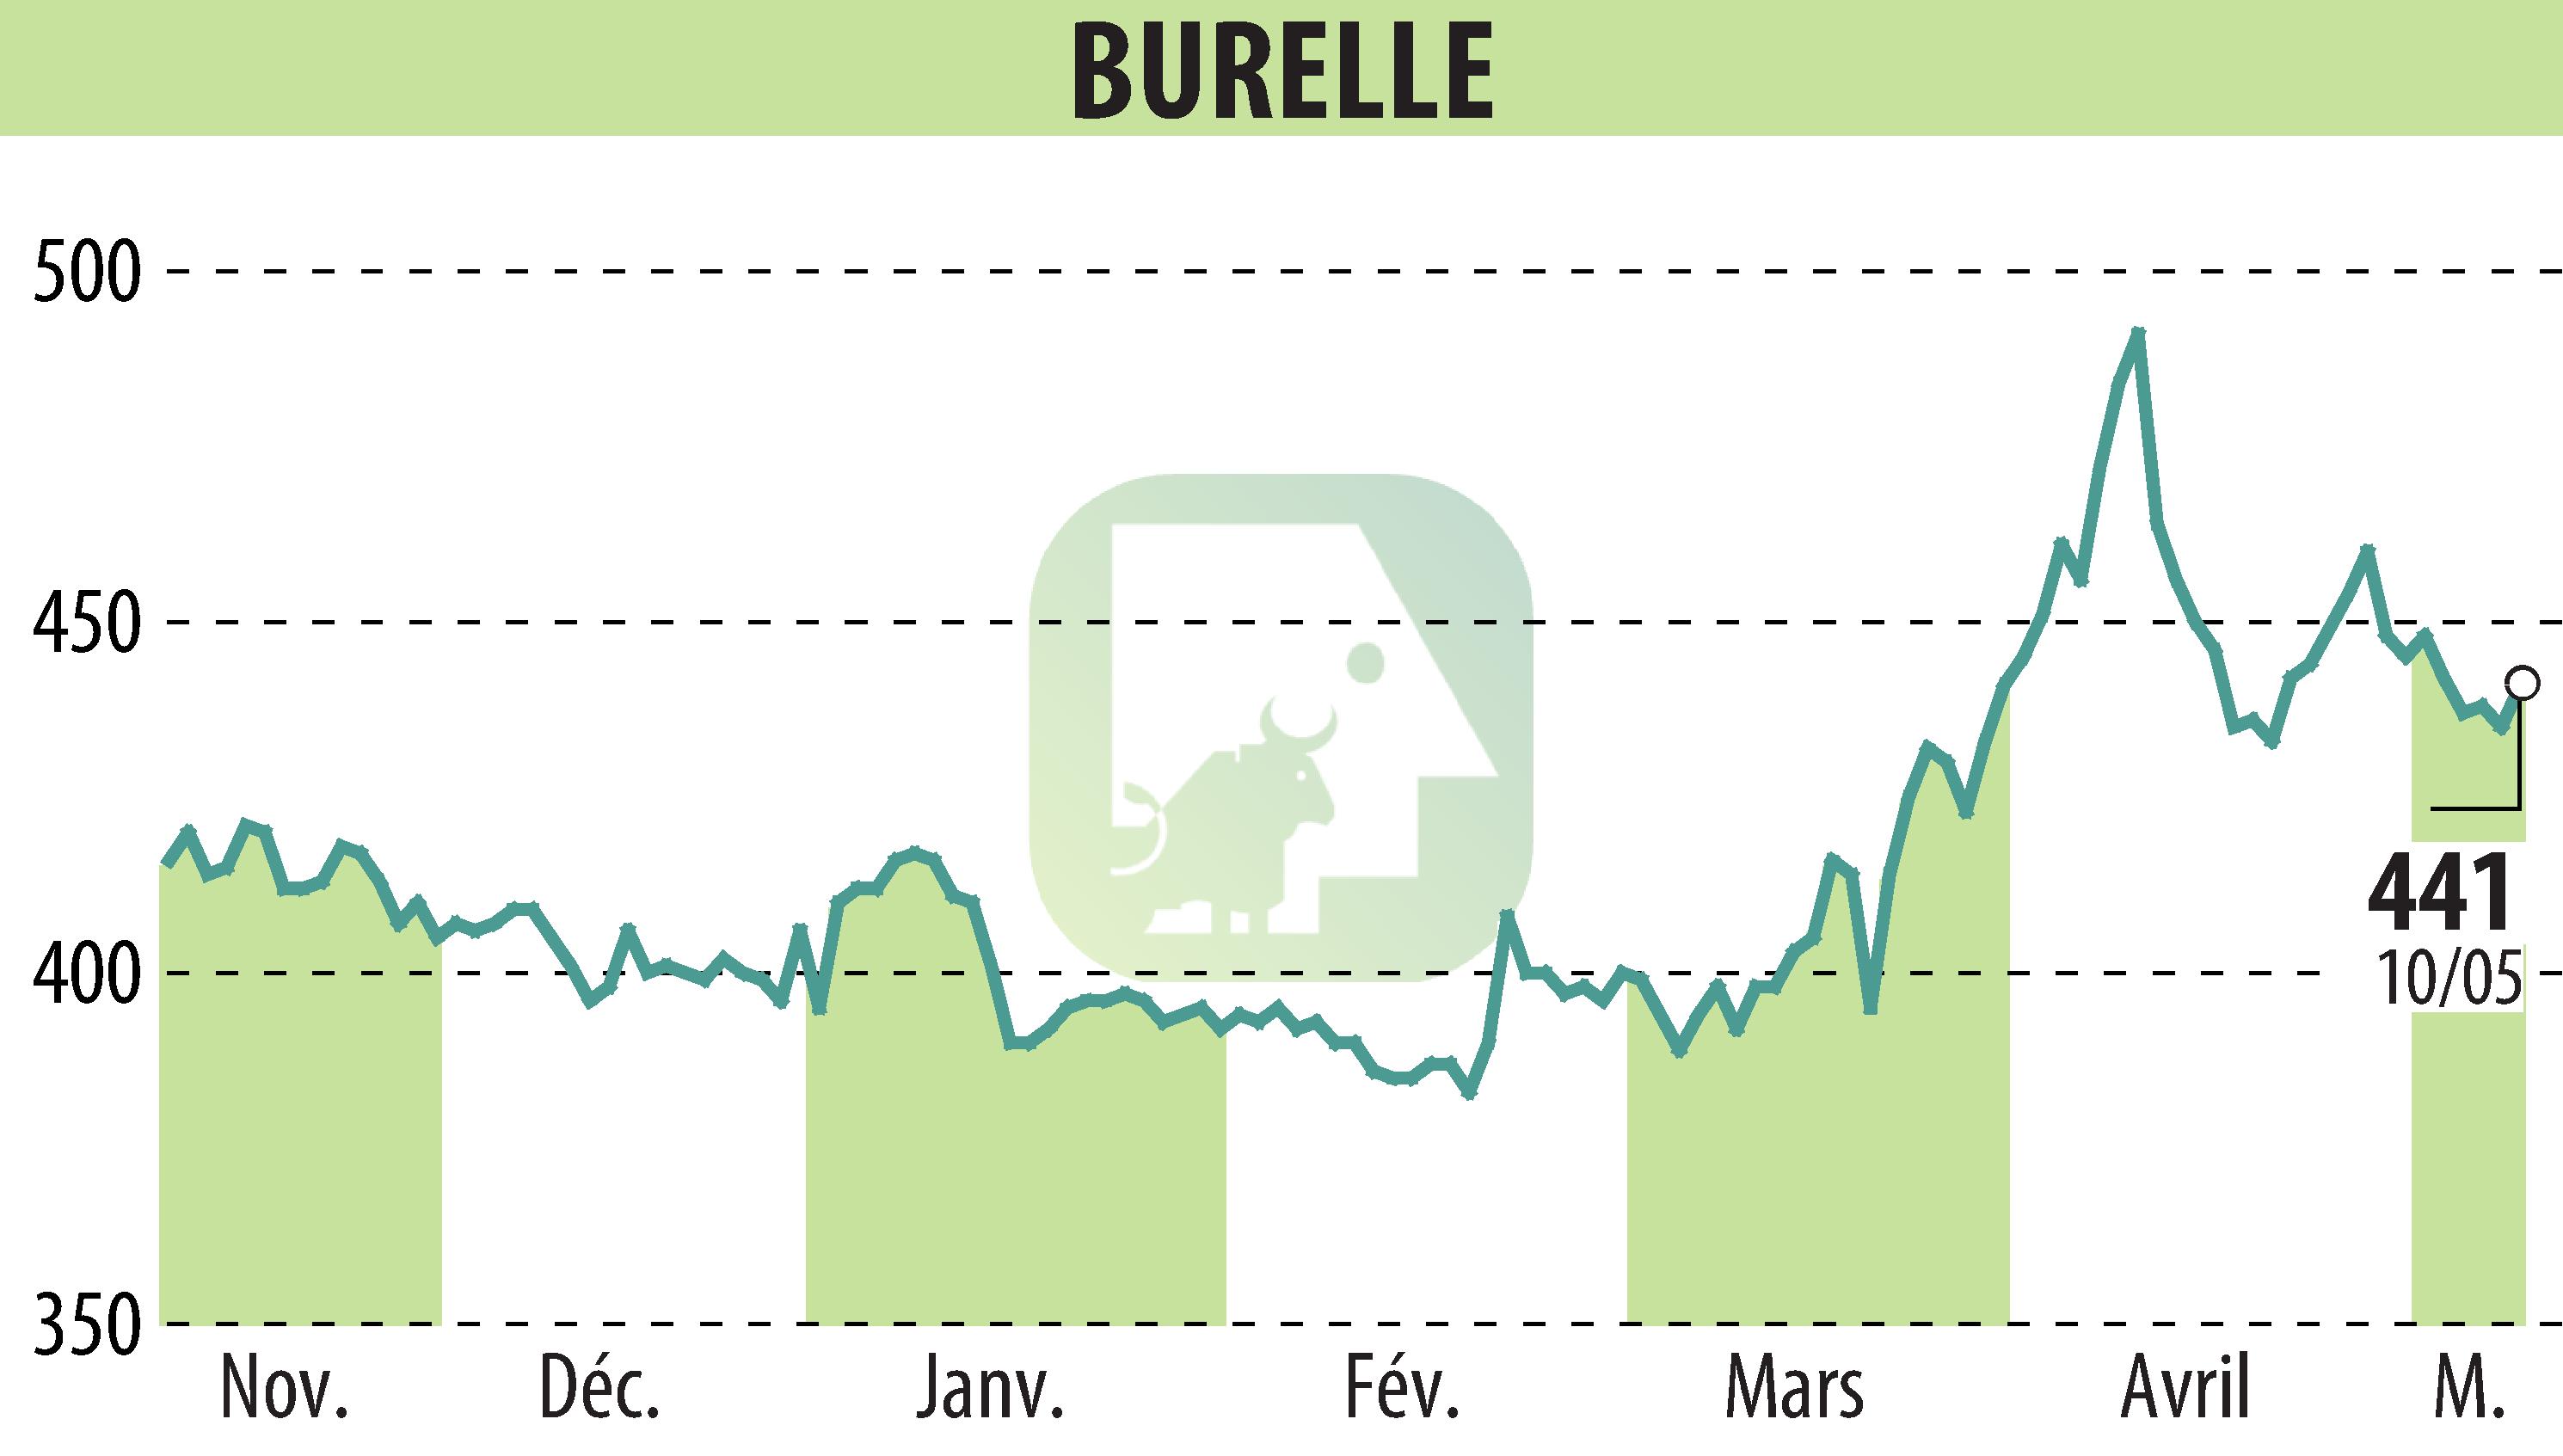 Stock price chart of BURELLE (EPA:BUR) showing fluctuations.